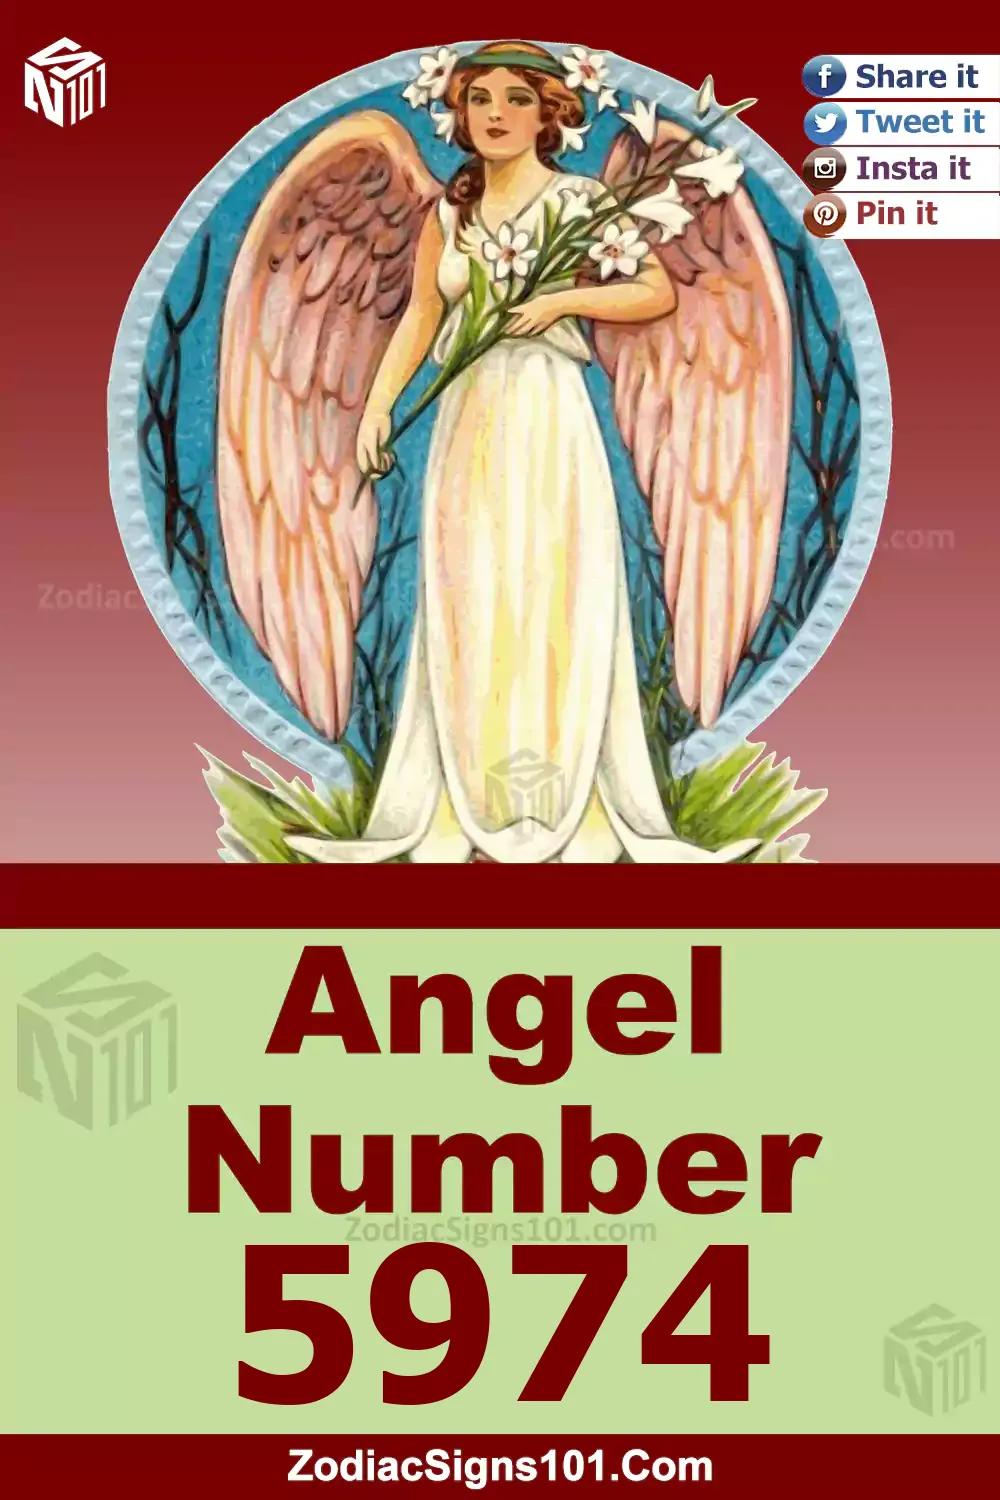 5974-Angel-Number-Meaning.jpg